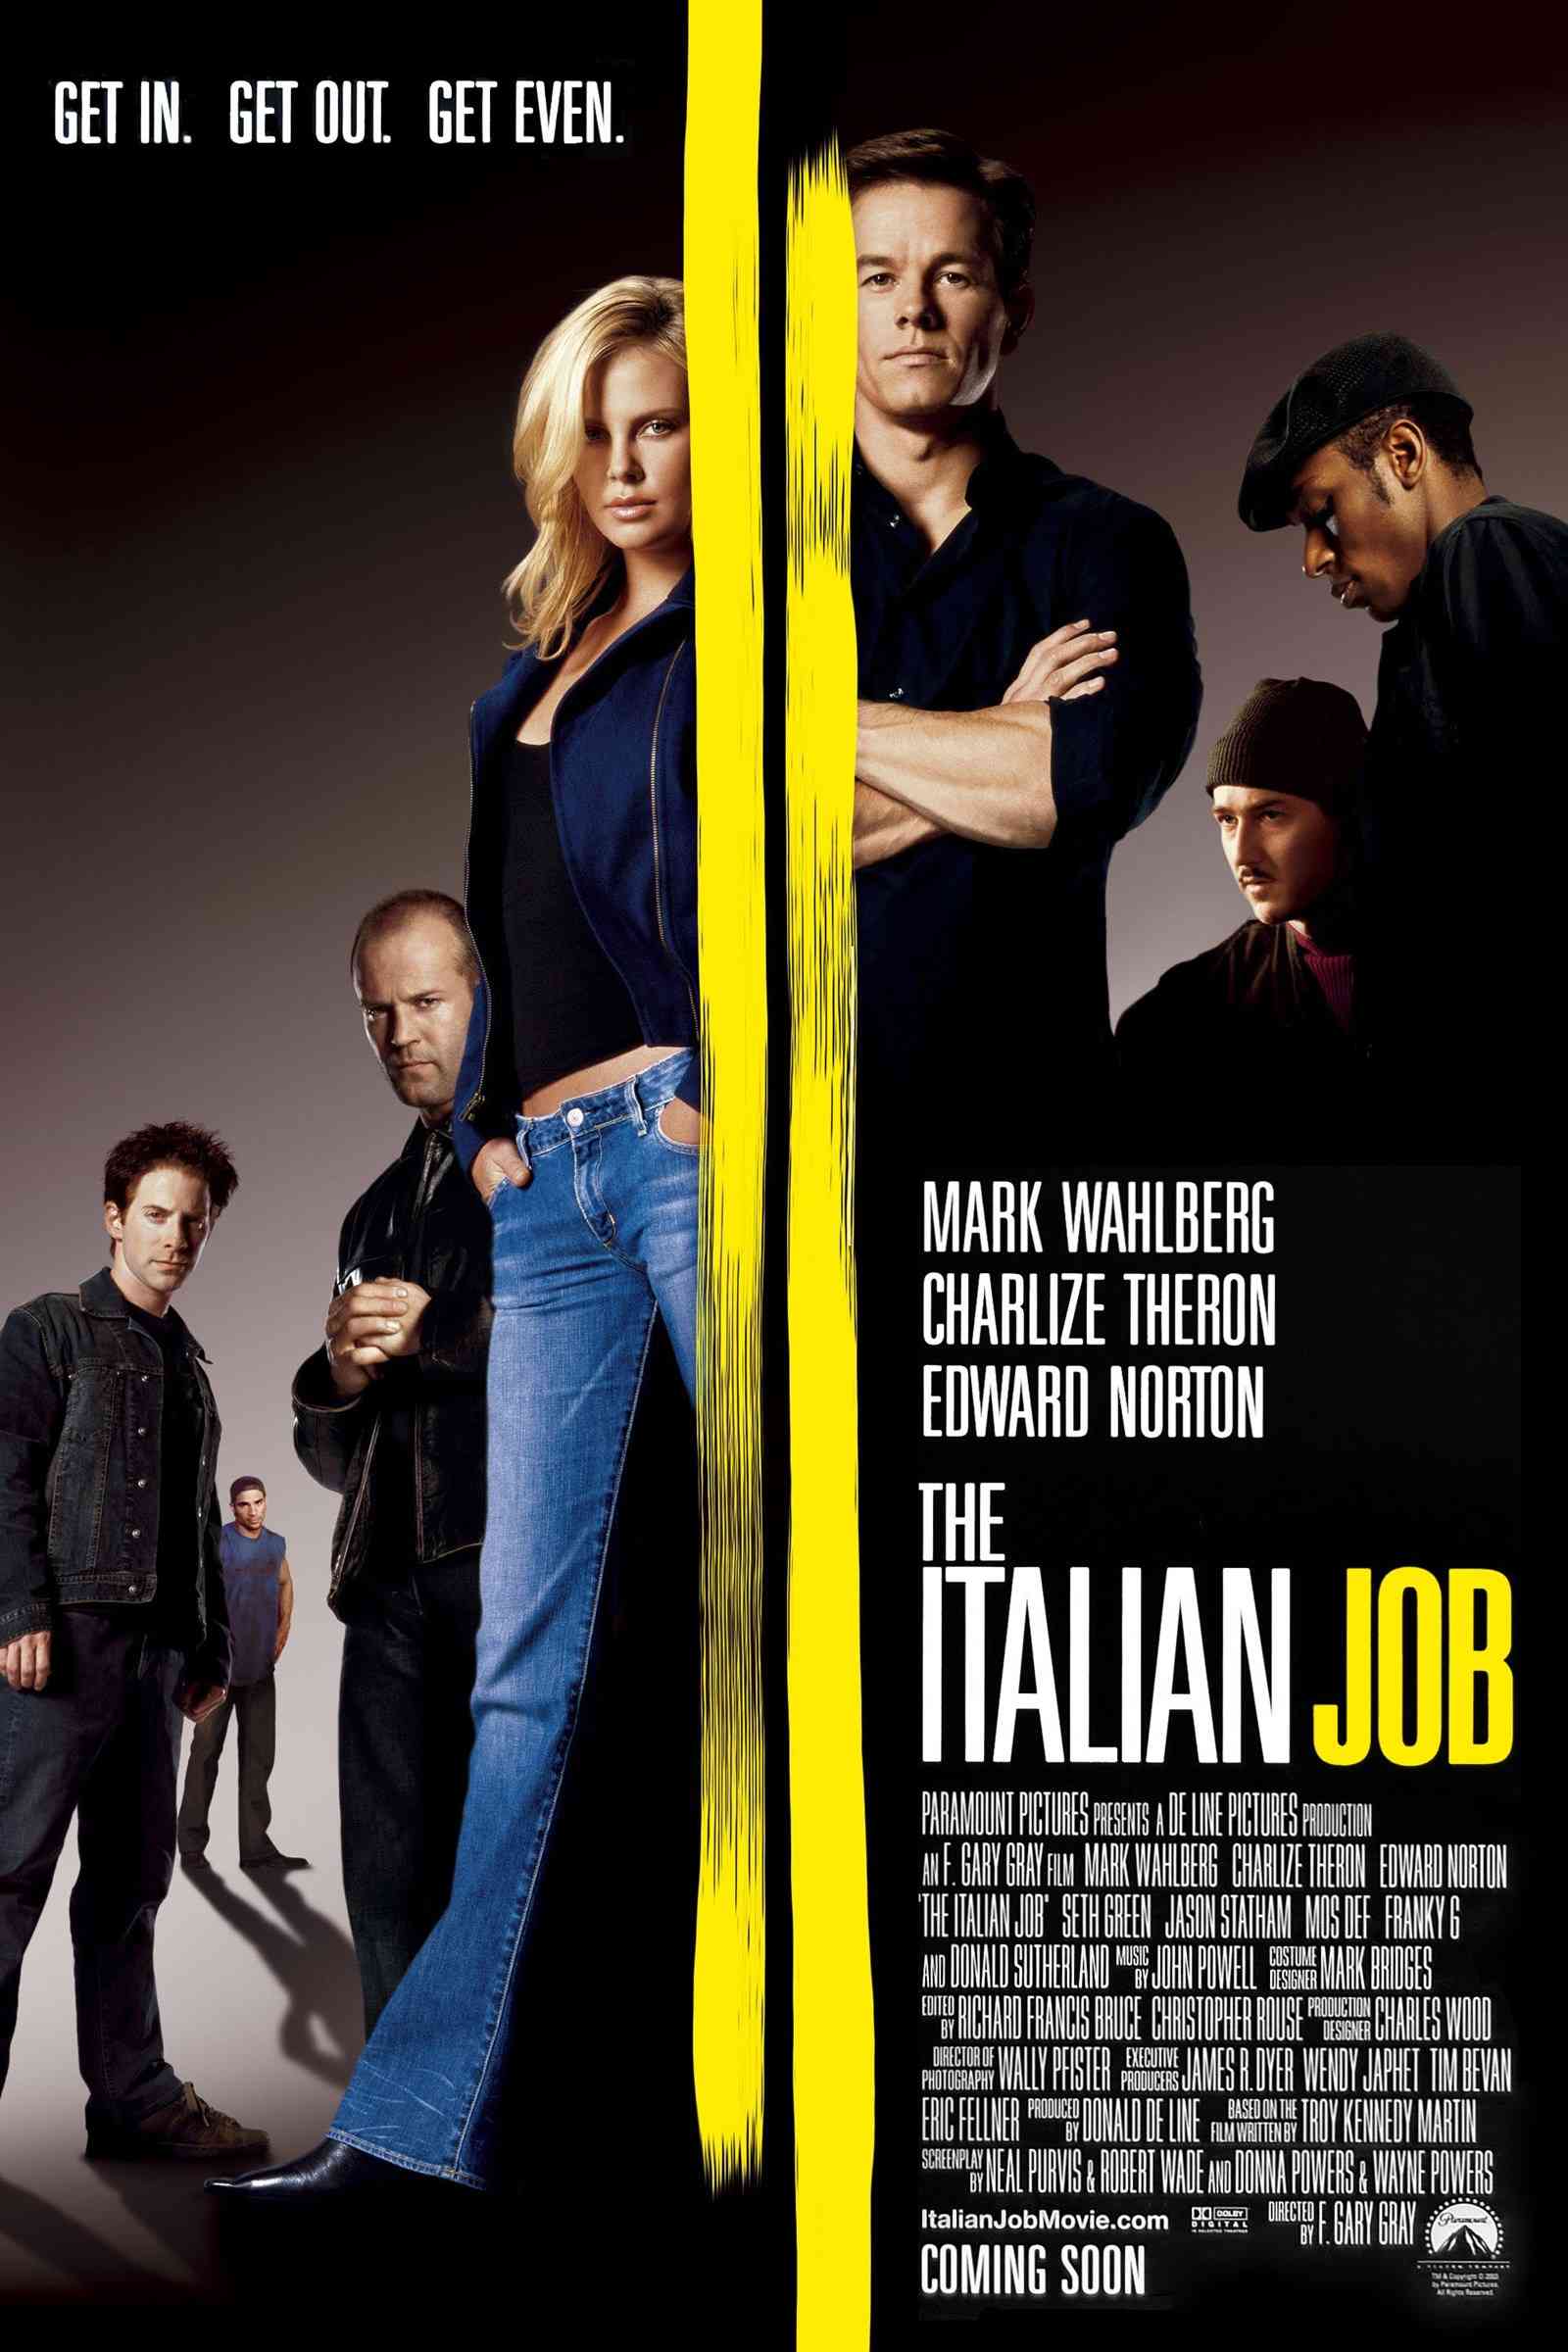 FULL MOVIE: The Italian Job (2003) [Action]